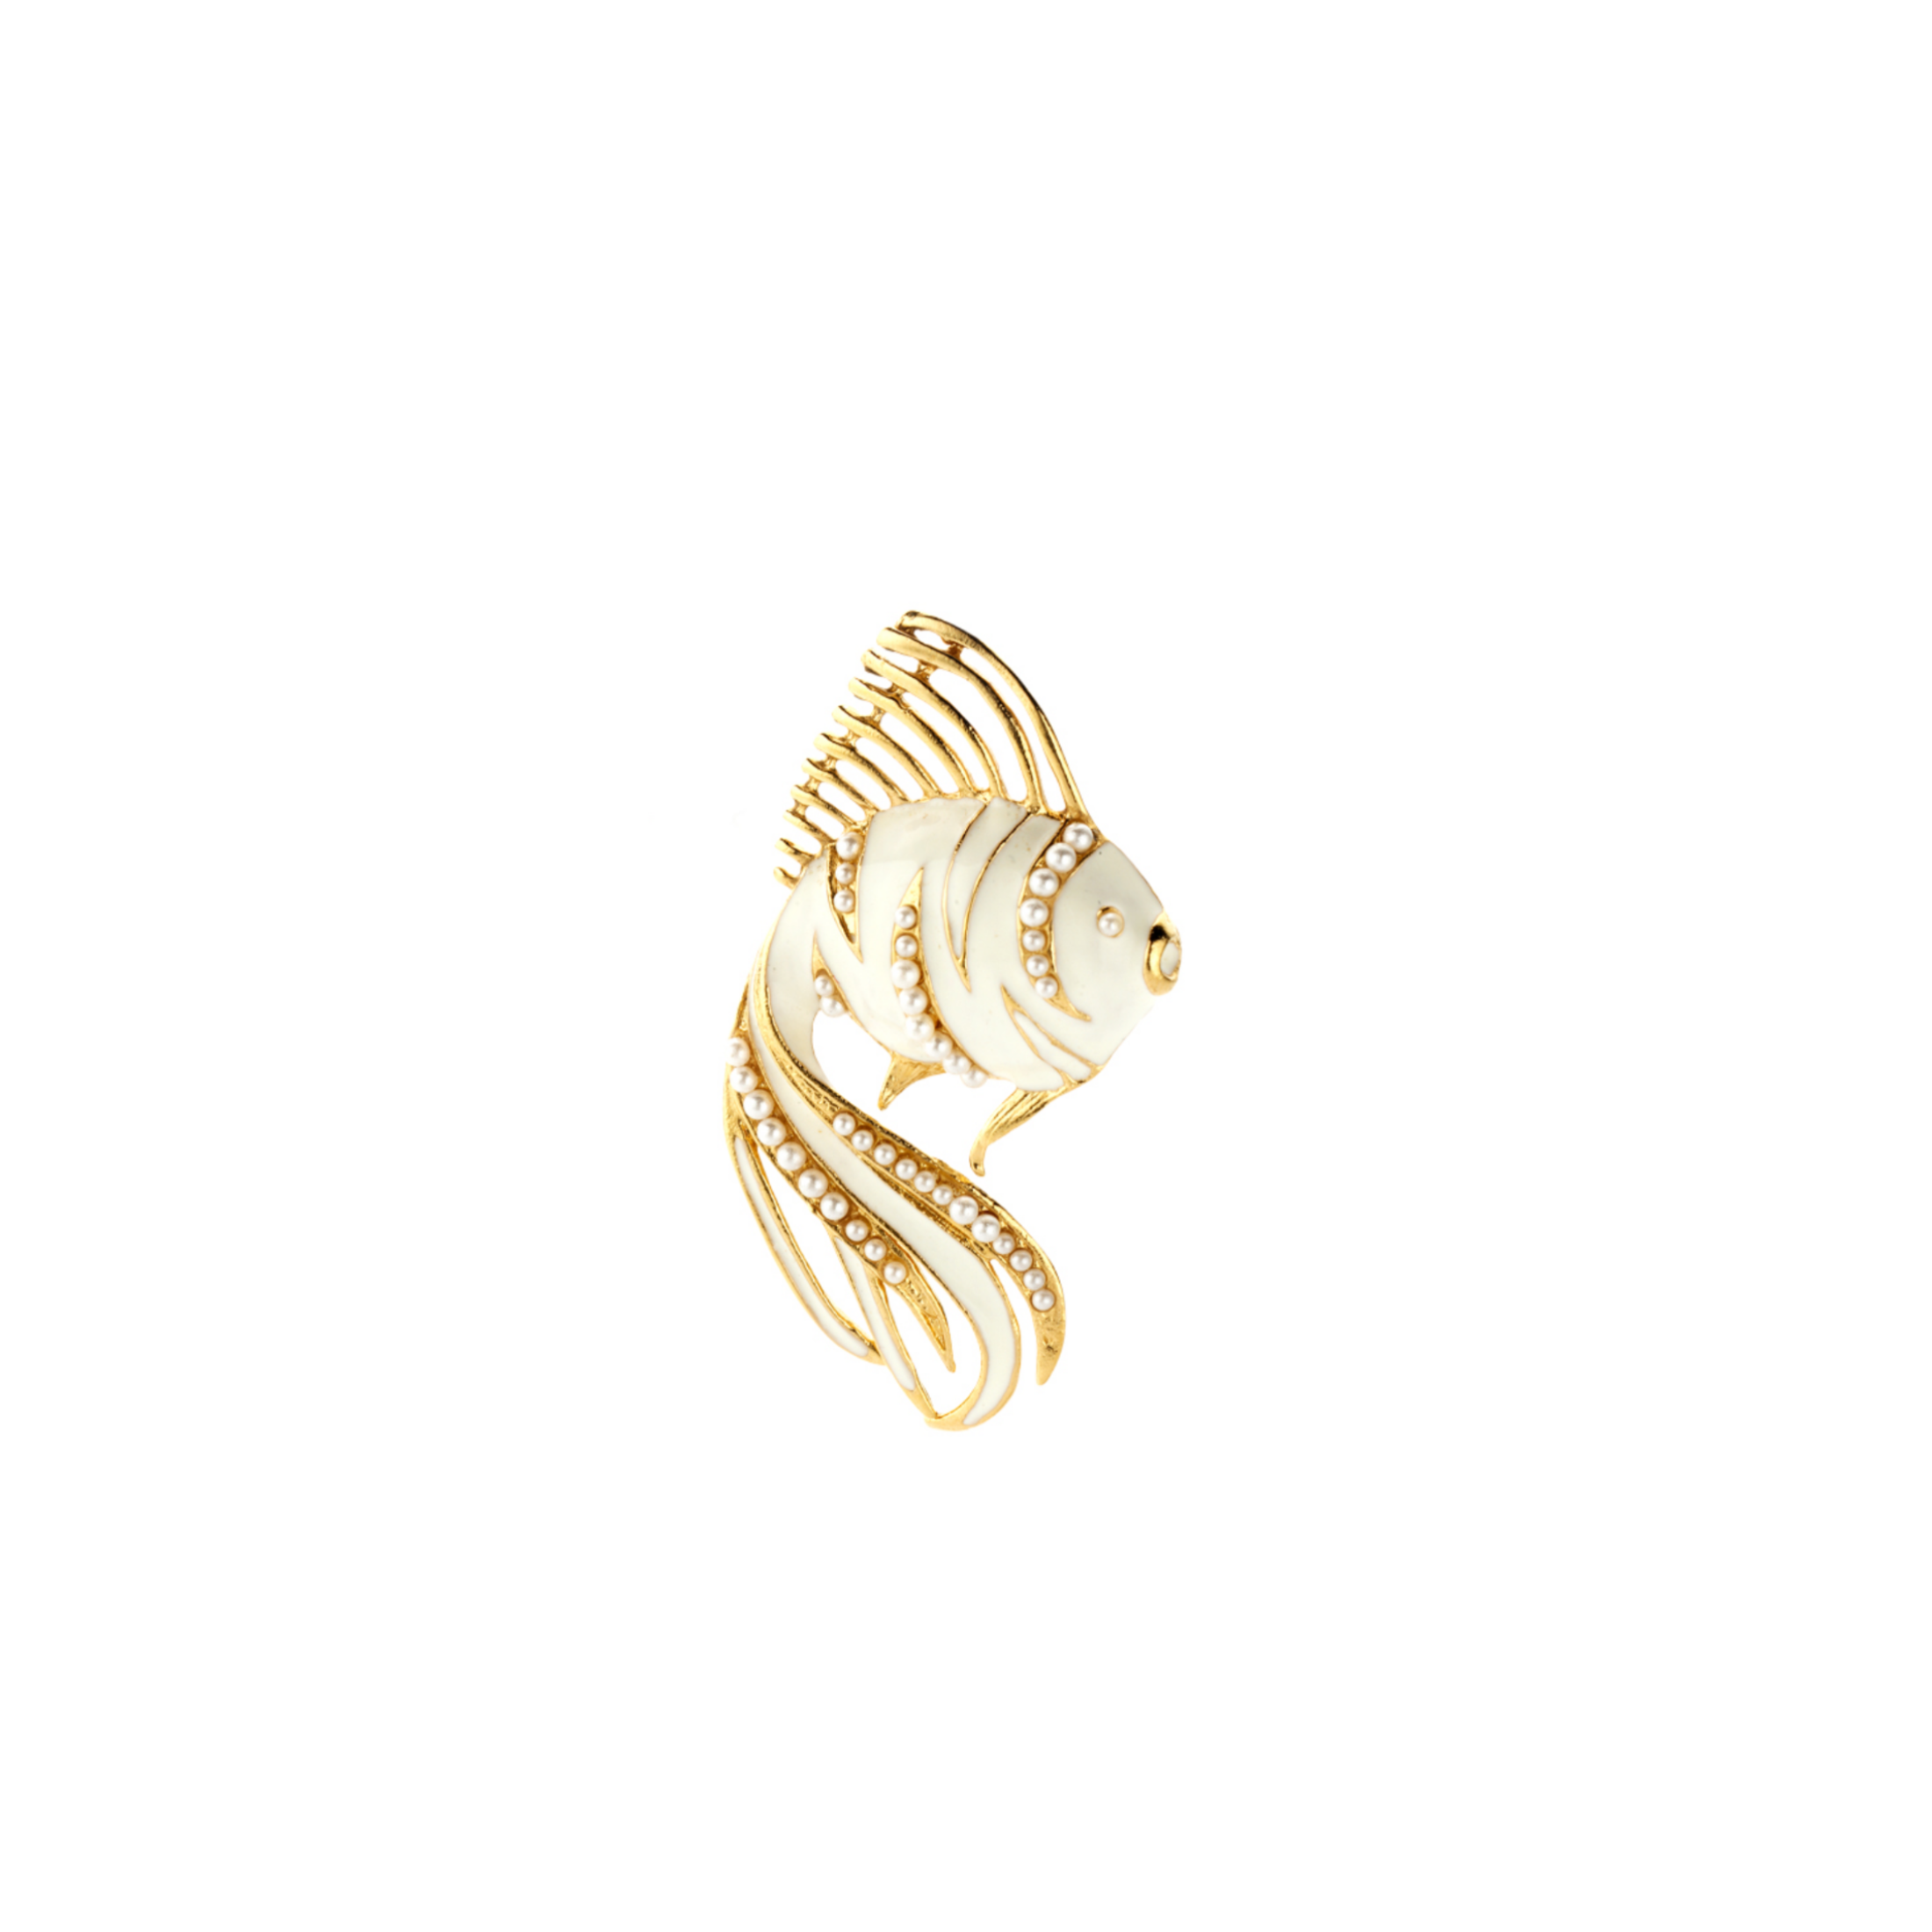 SINGLE Mermaid cream pearls earring - Souvenirs de Pomme